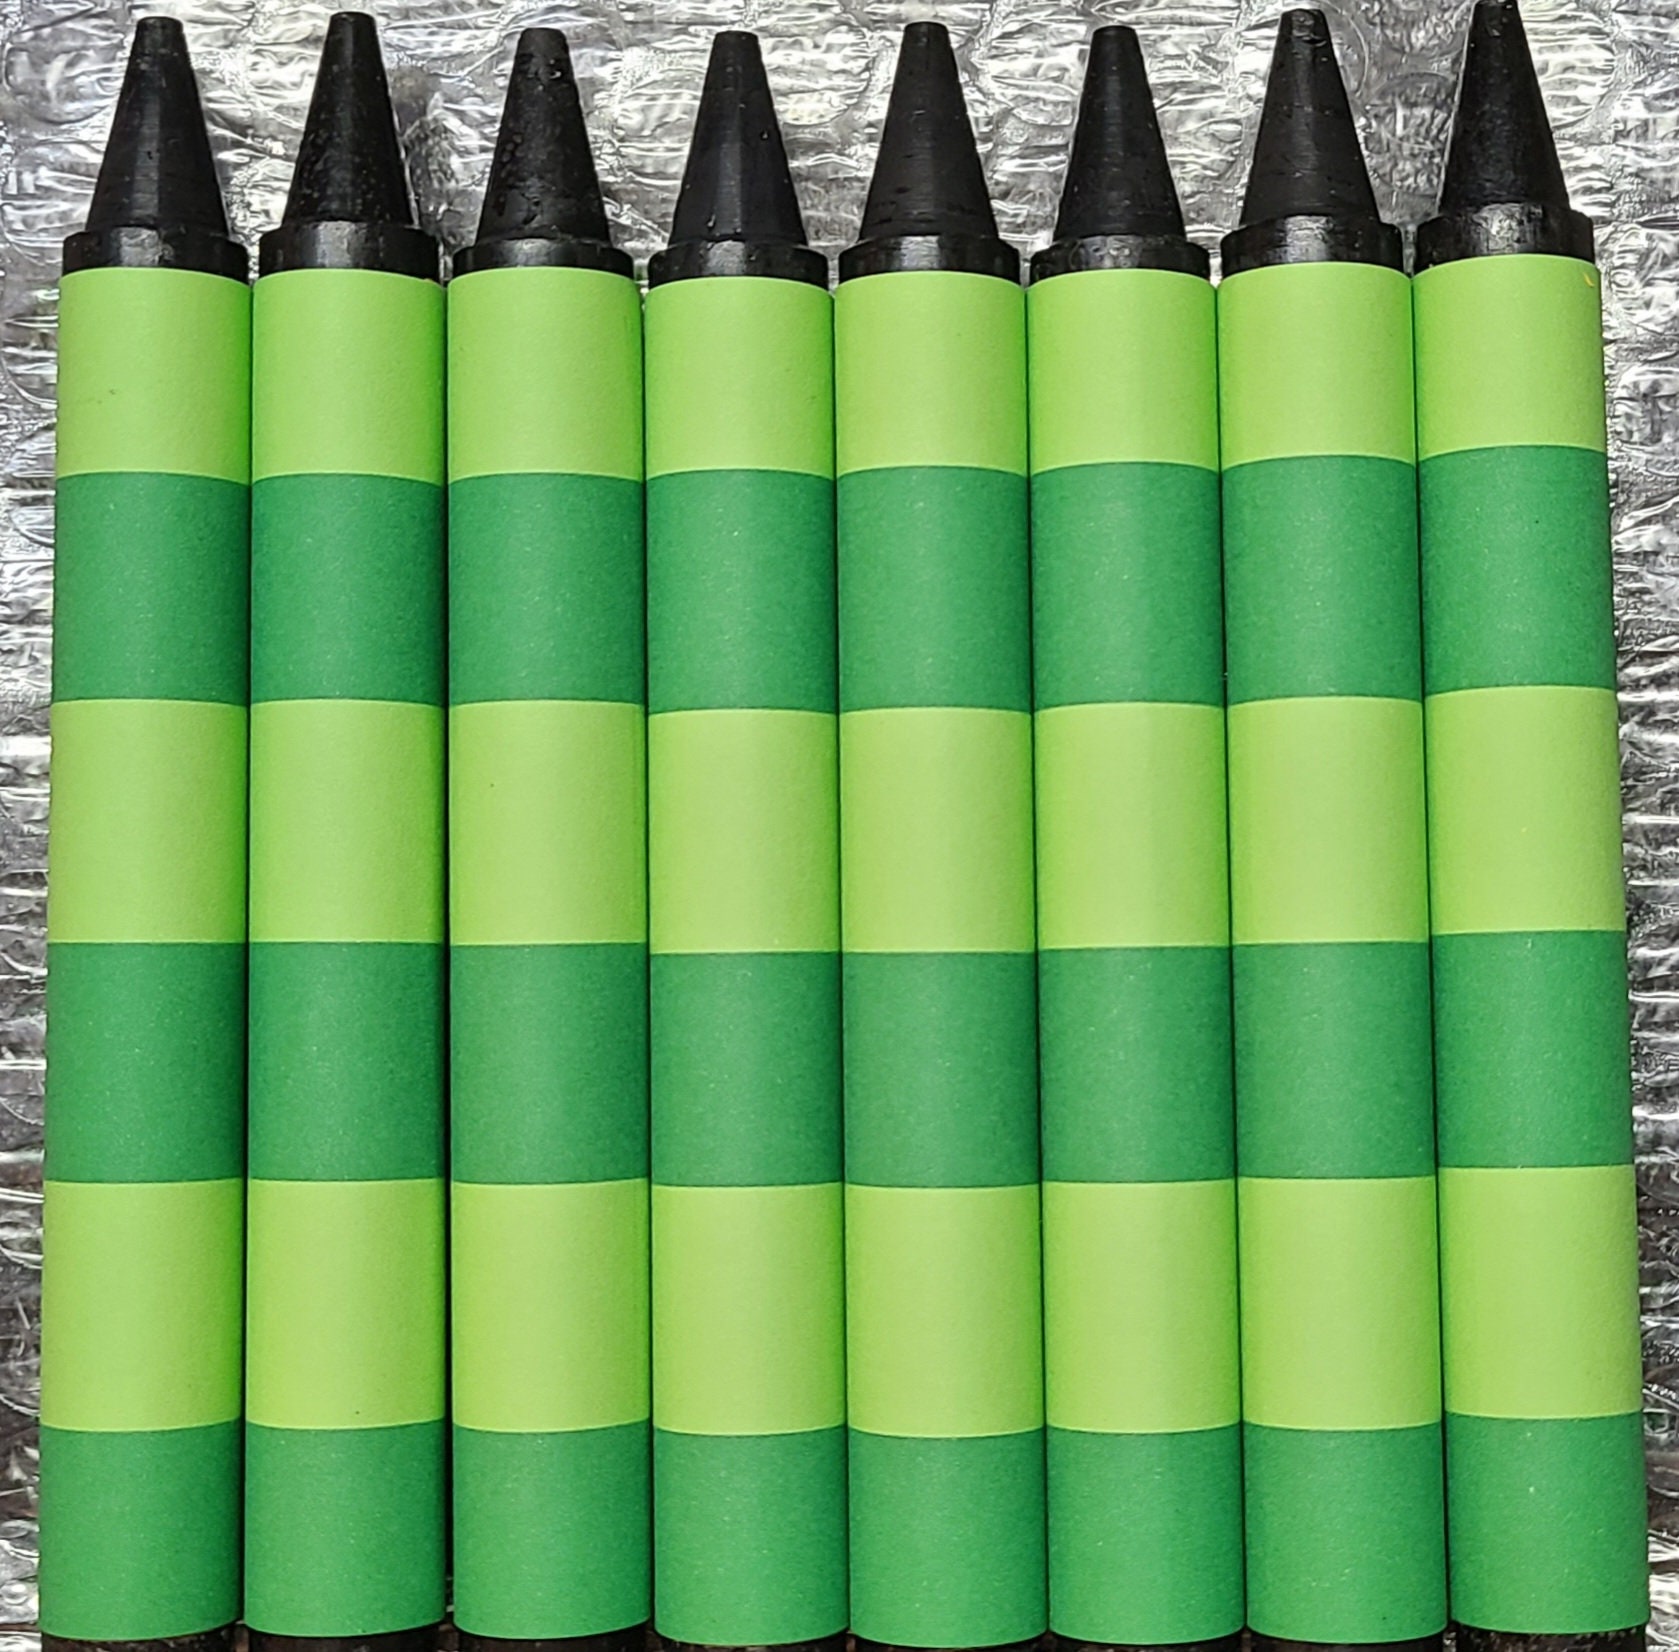 Crayola Crayons - Shop Crayons at H-E-B